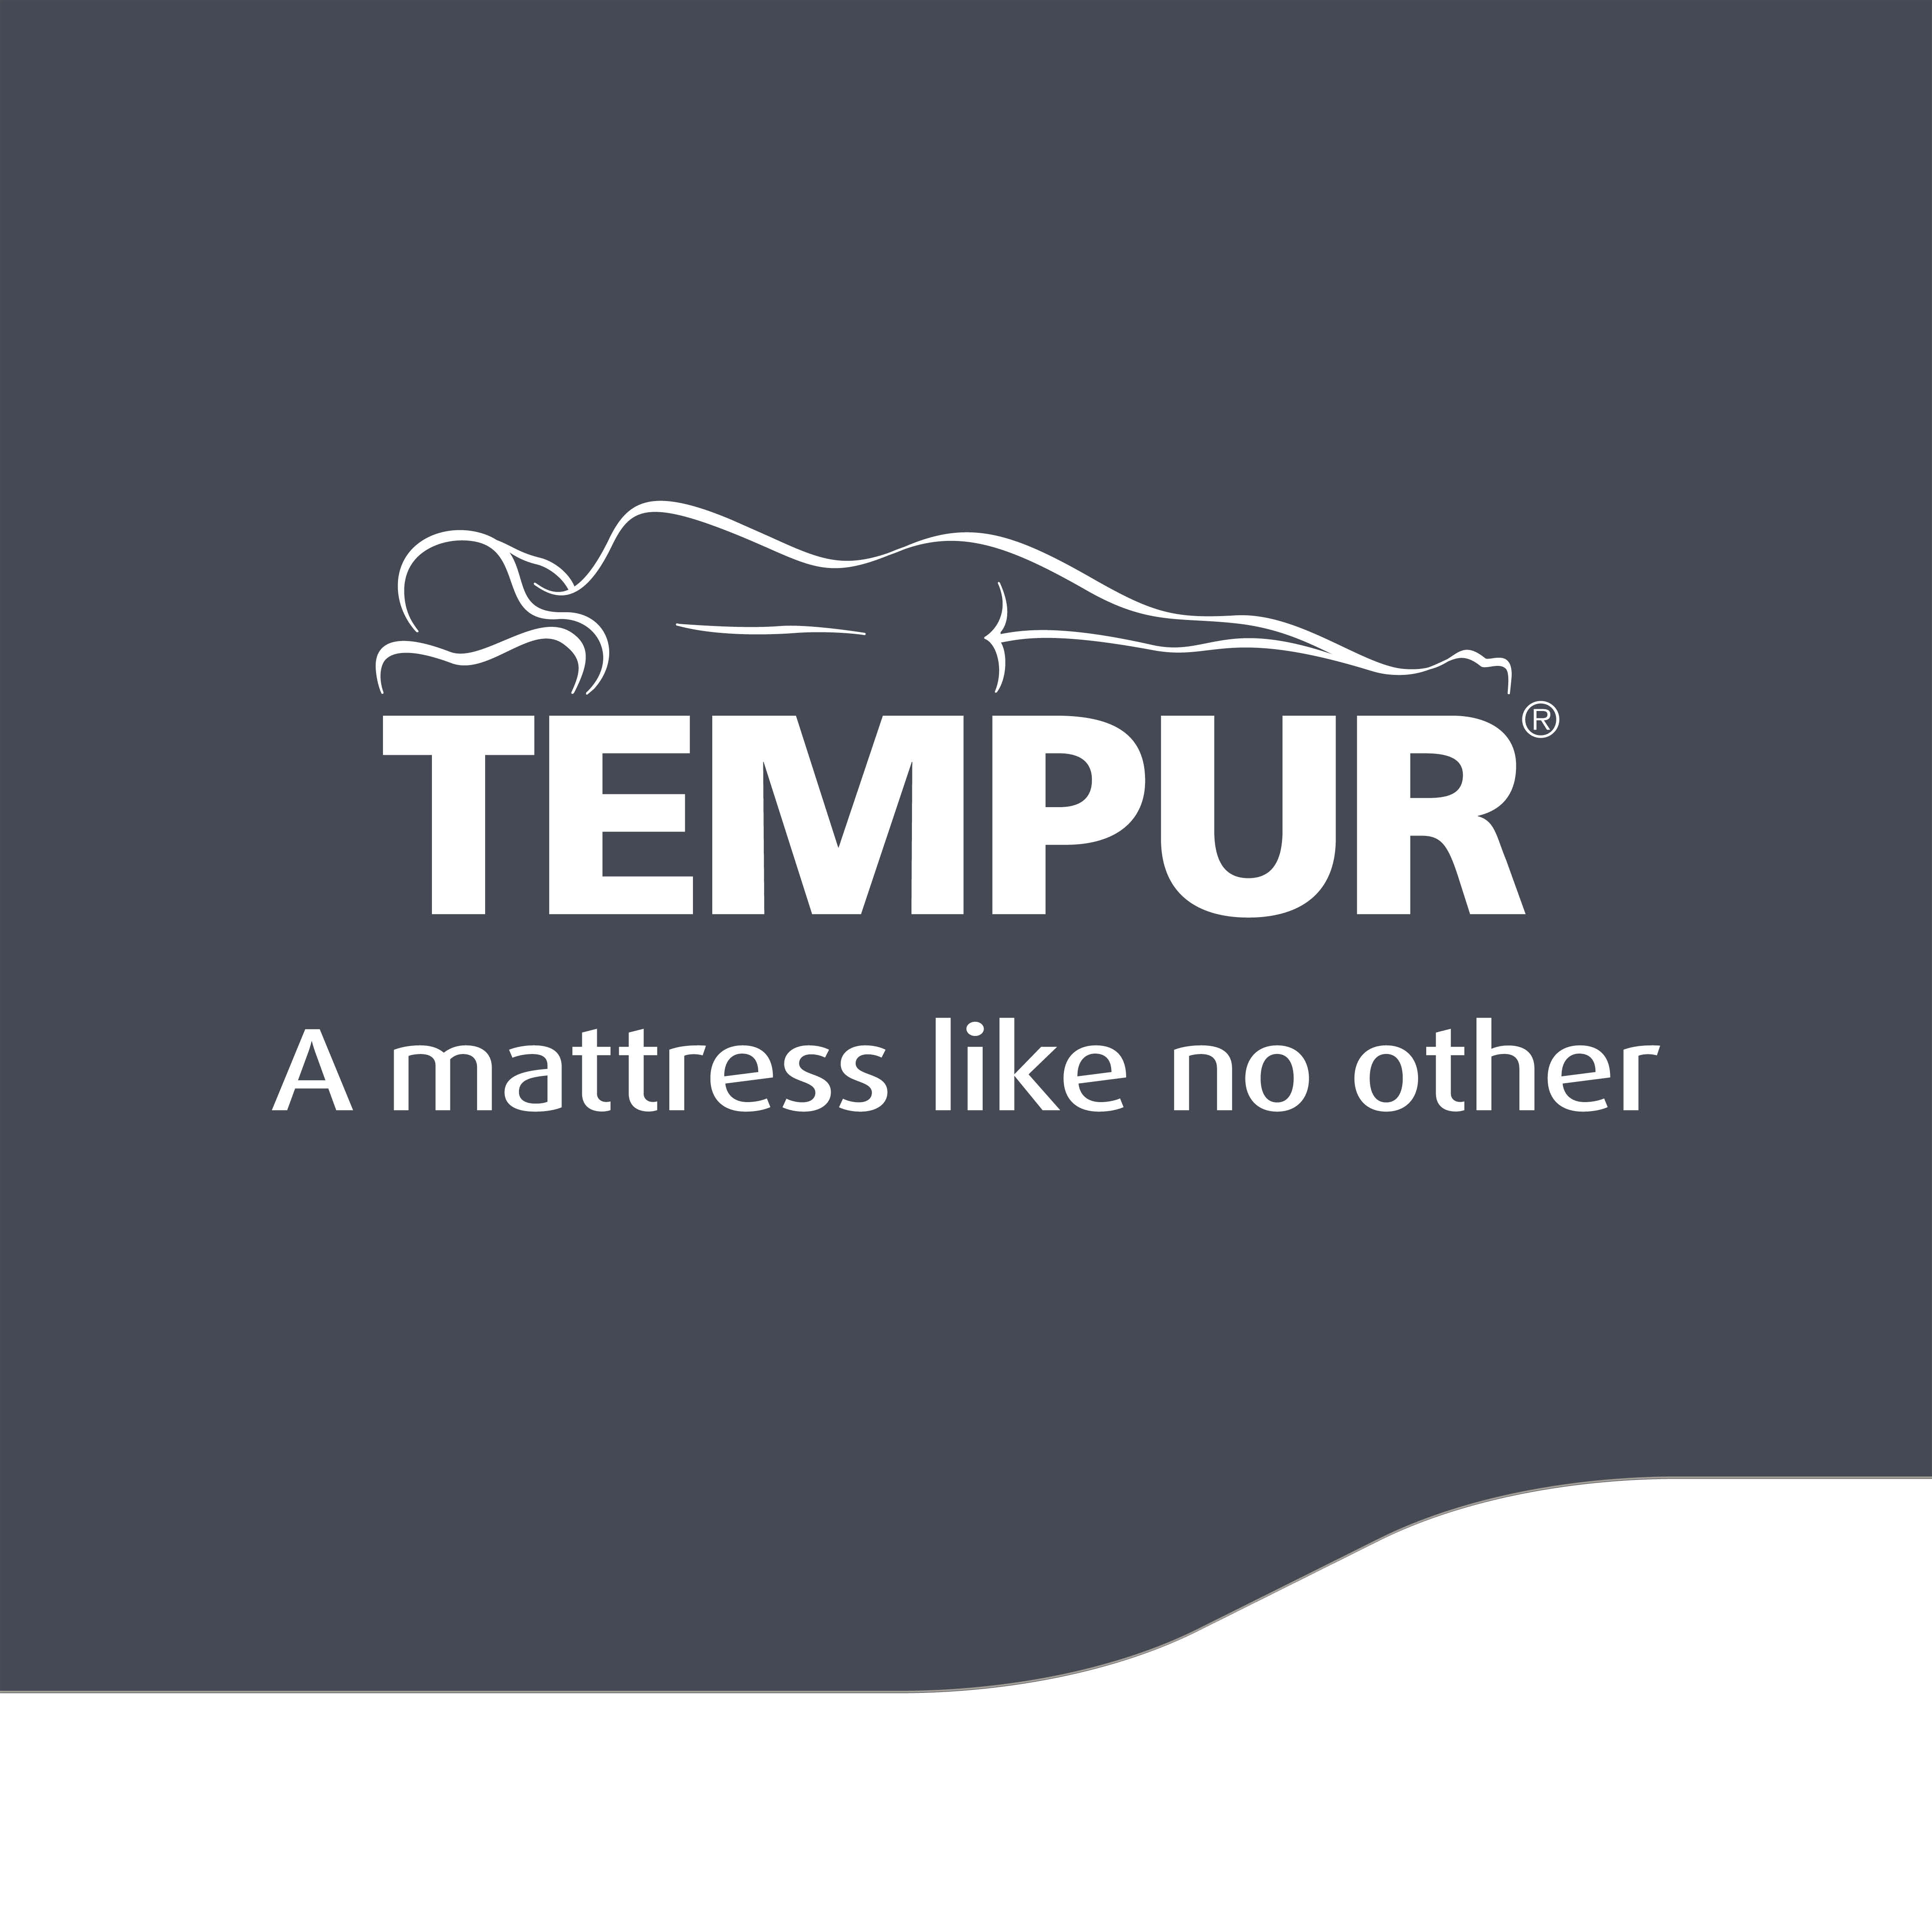 Tempur a matress like no other